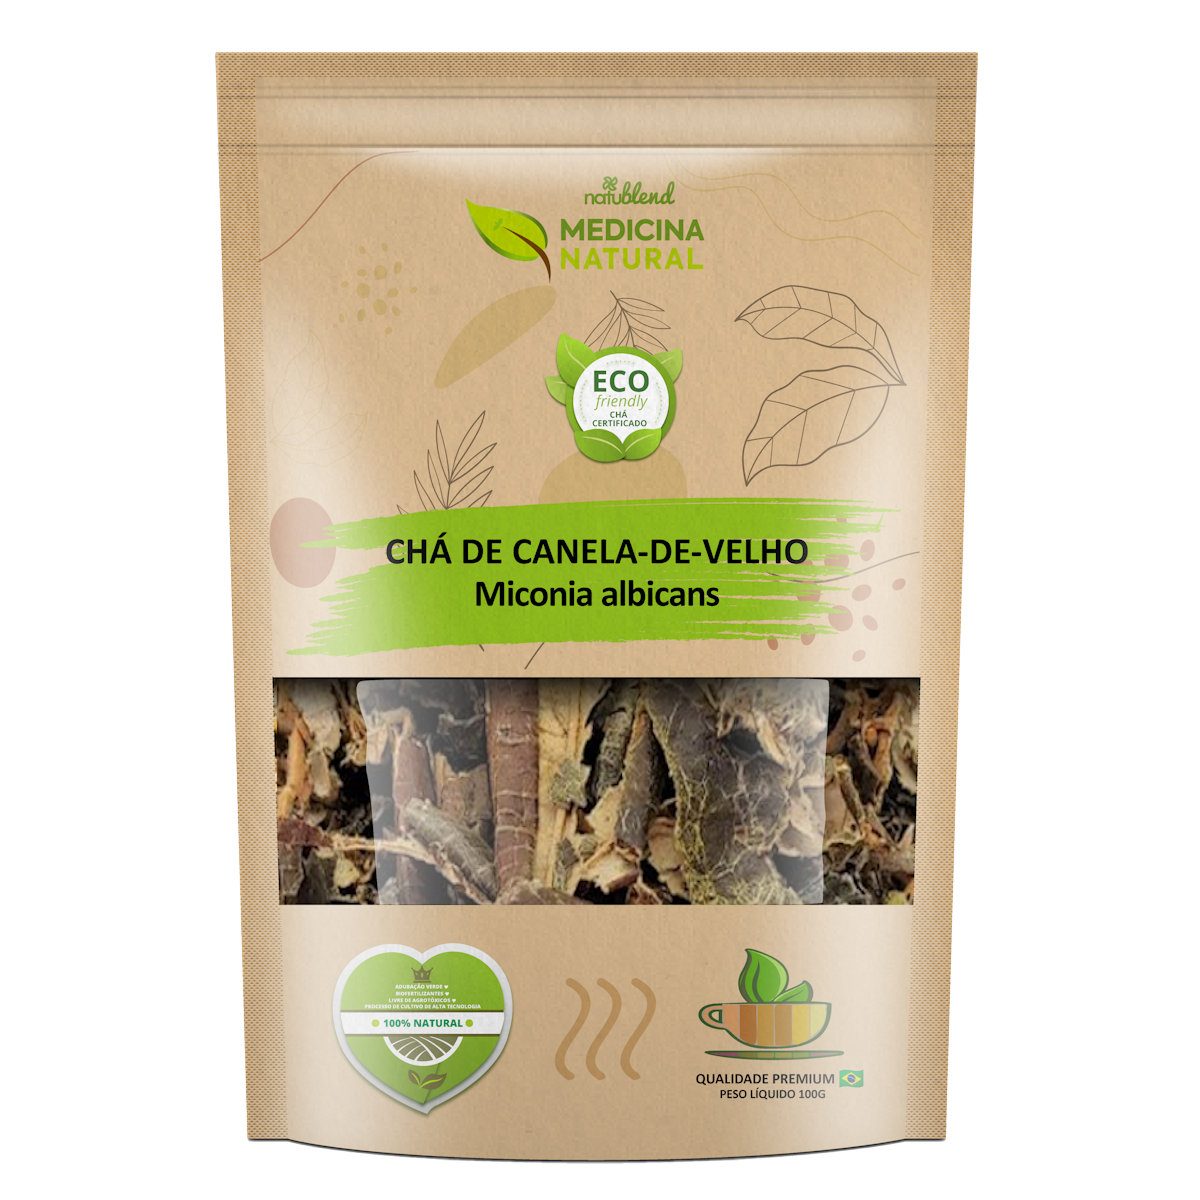 Chá de Canela de Velho - Miconia albicans - Medicina Natural